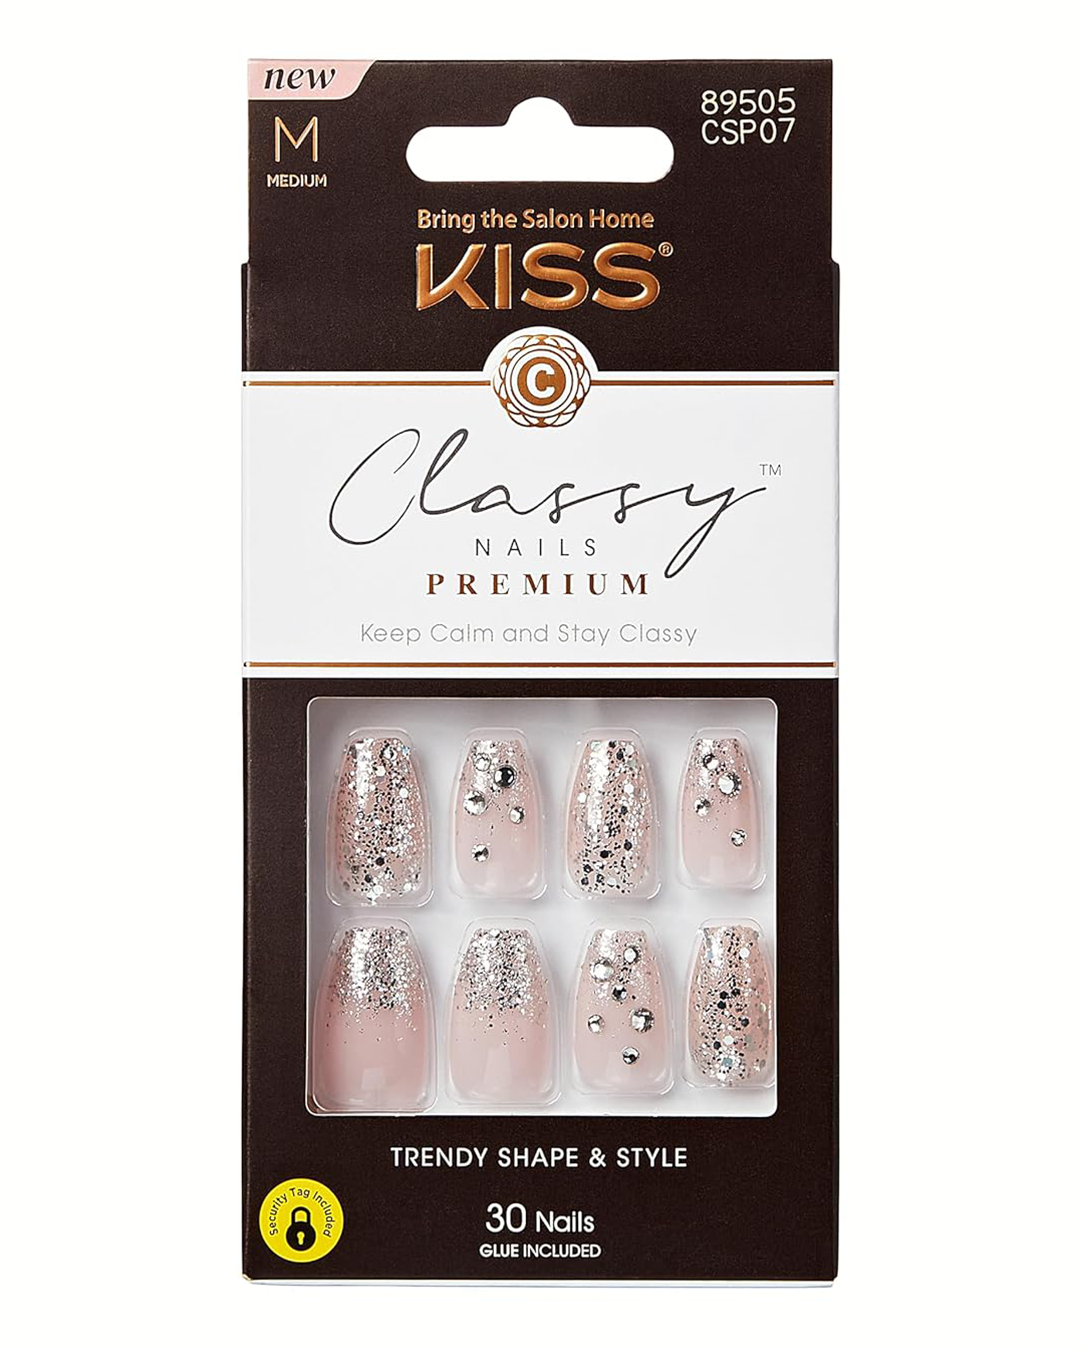 Kiss Classy Nails (CSP07)